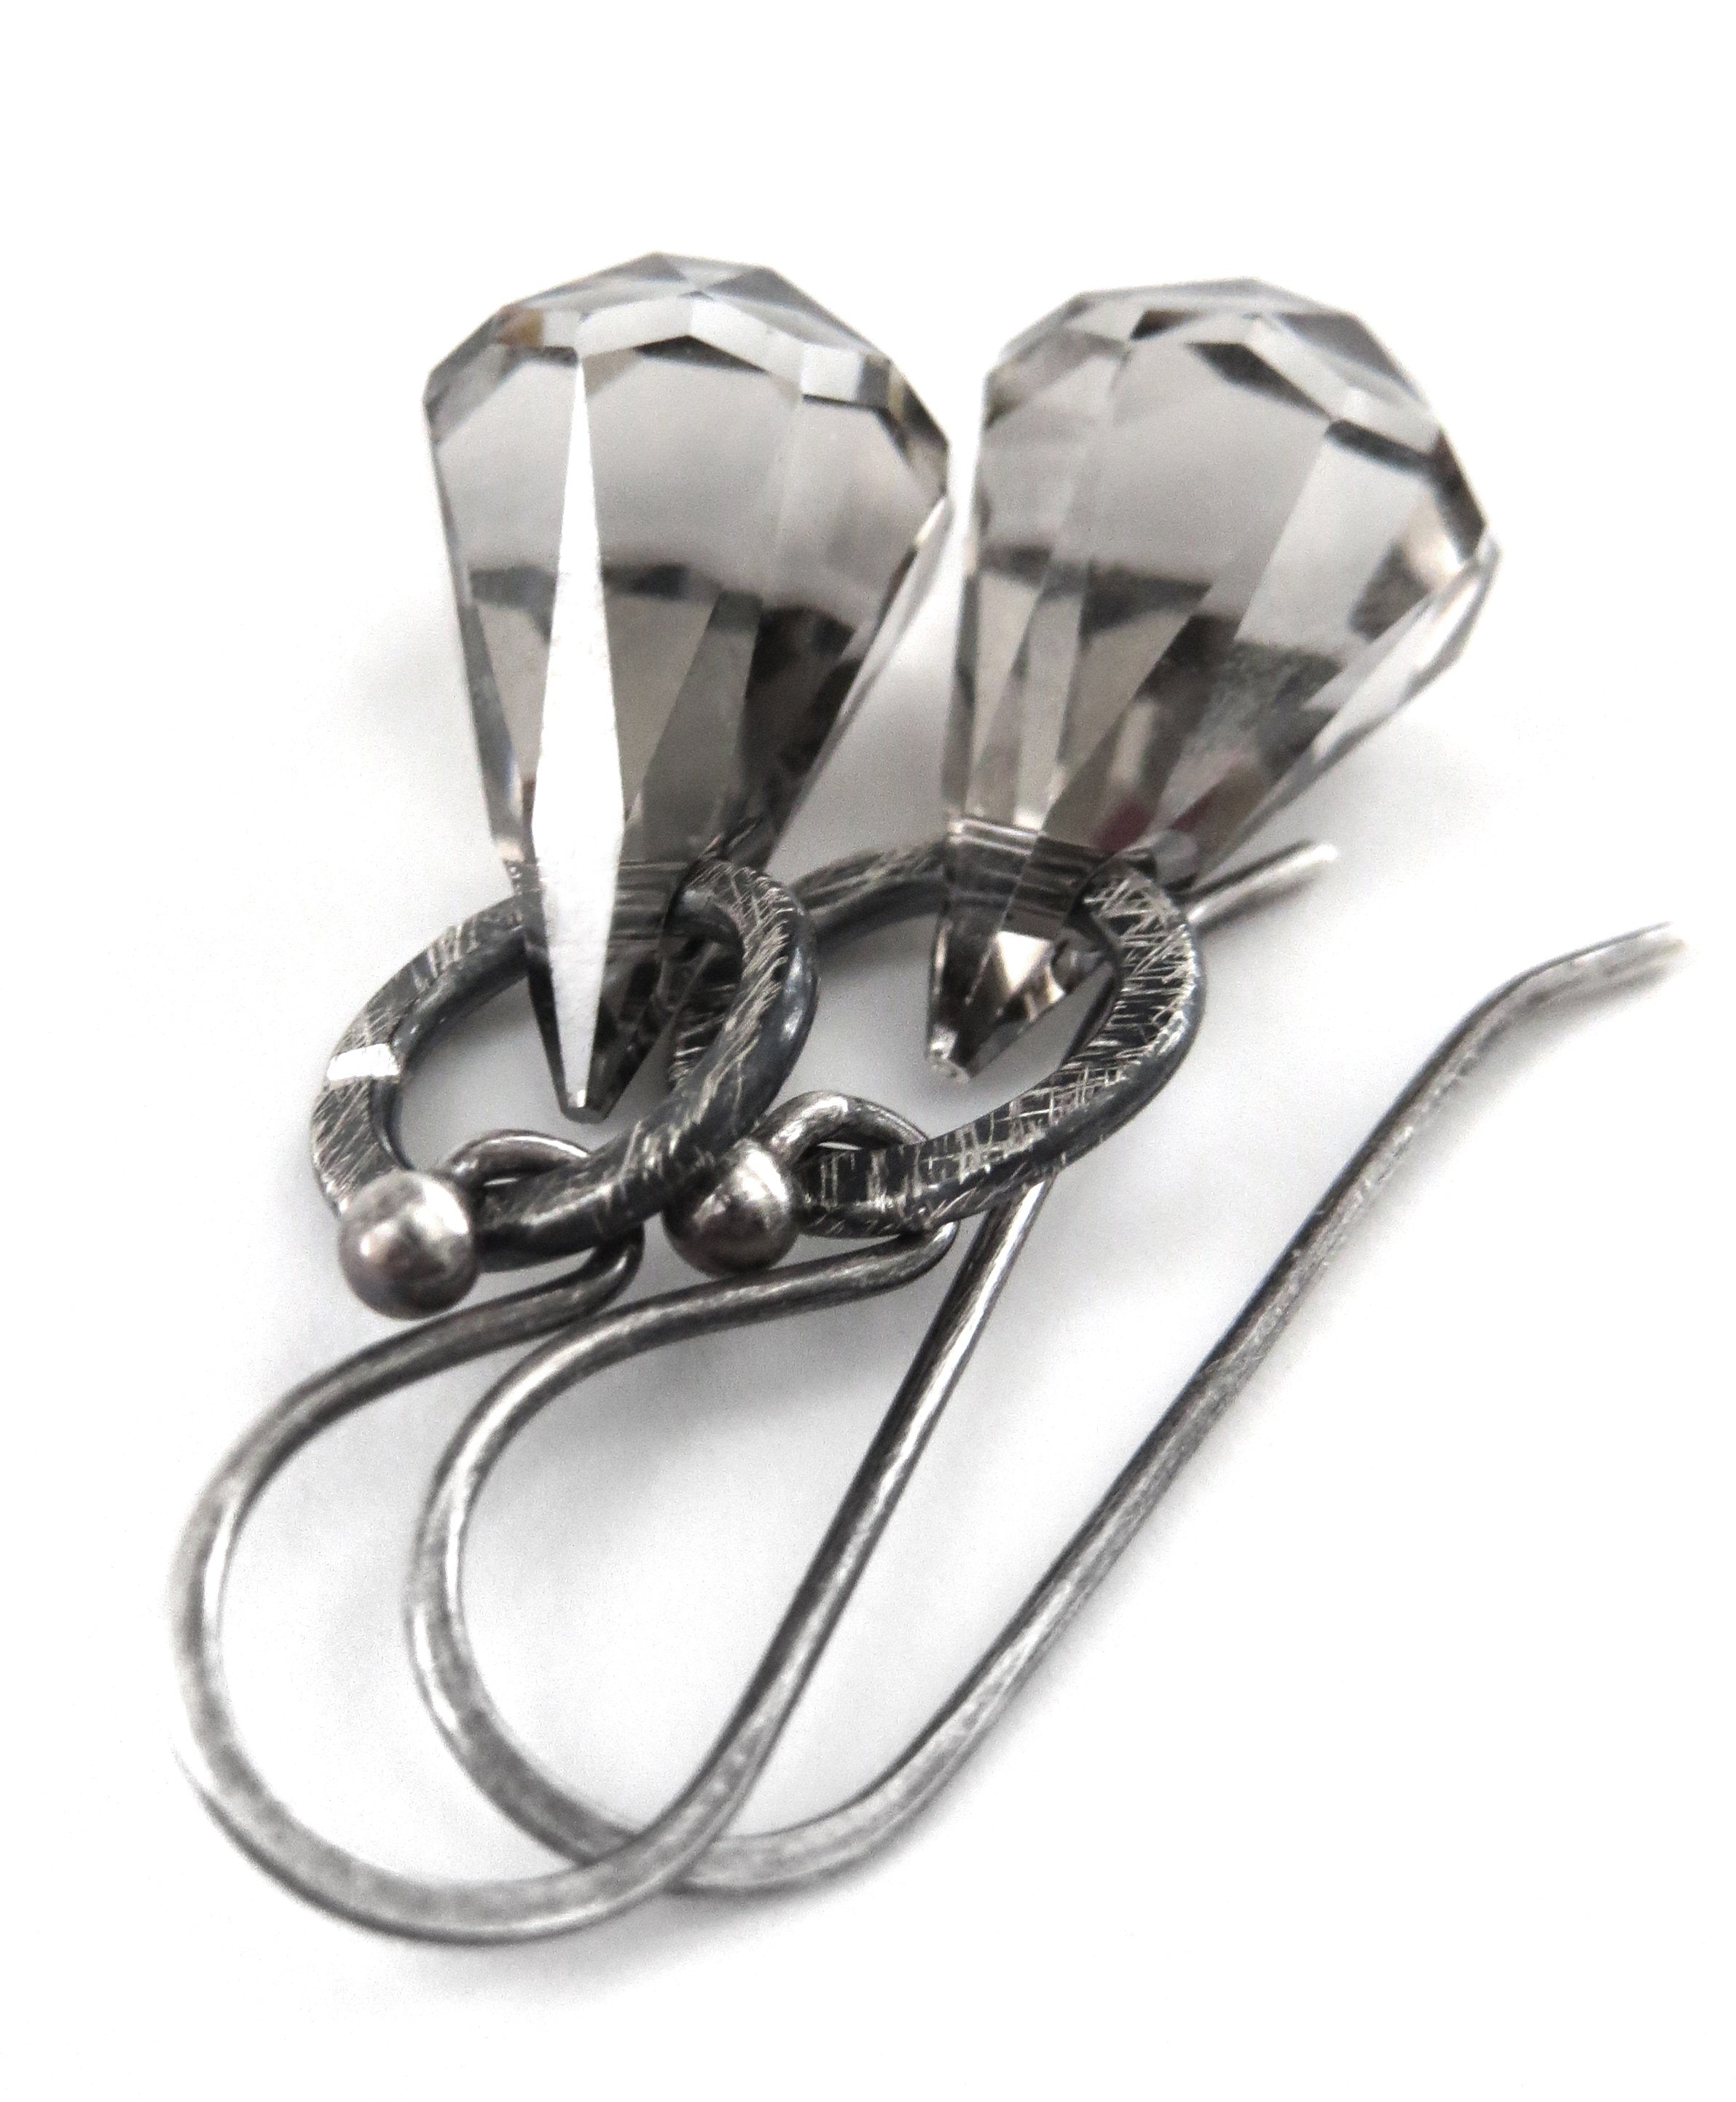 STRIKE - Small Earrings with Sheer Grey Swarovski Crystals, Oxidized Sterling Silver - Geometric Minimalist Modern Sterling Silver Jewelry